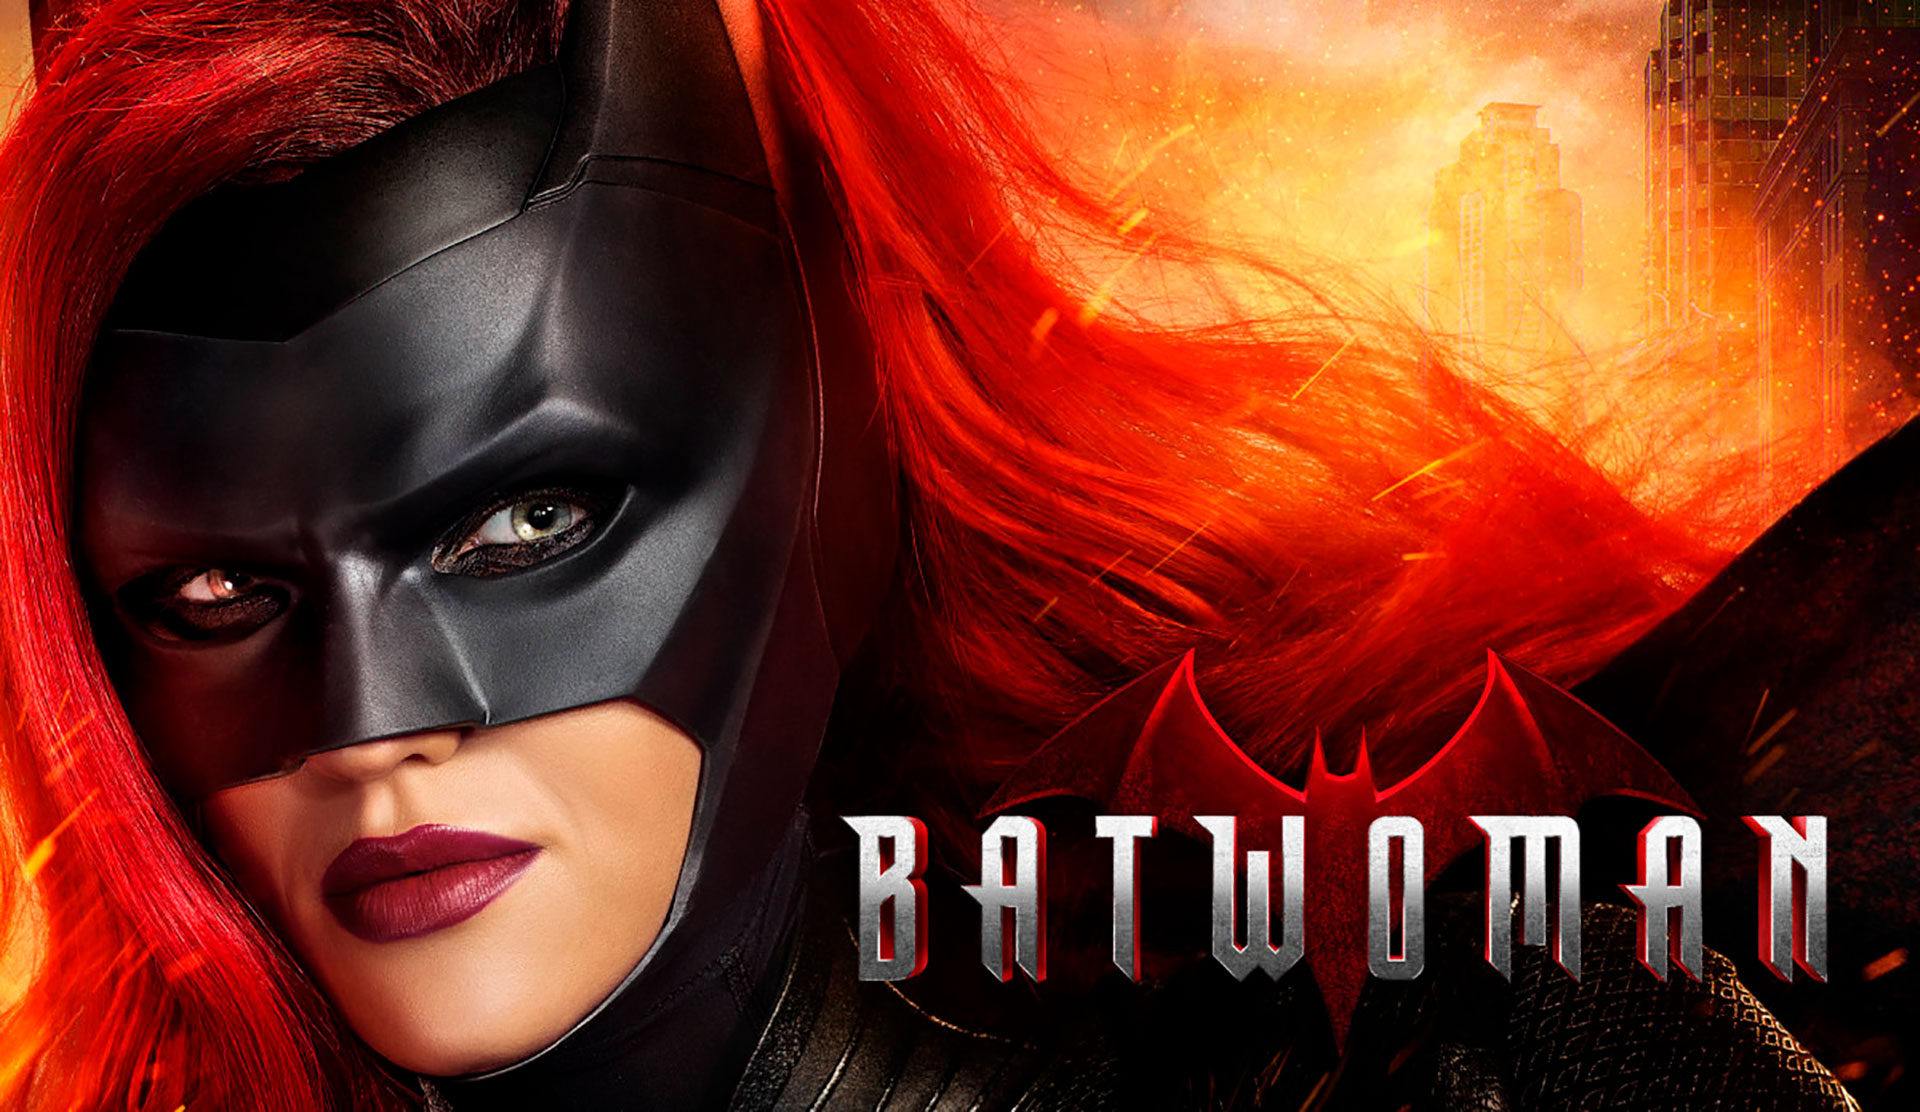 batwoman wallpaper,fictional character,batman,superhero,cg artwork,hero